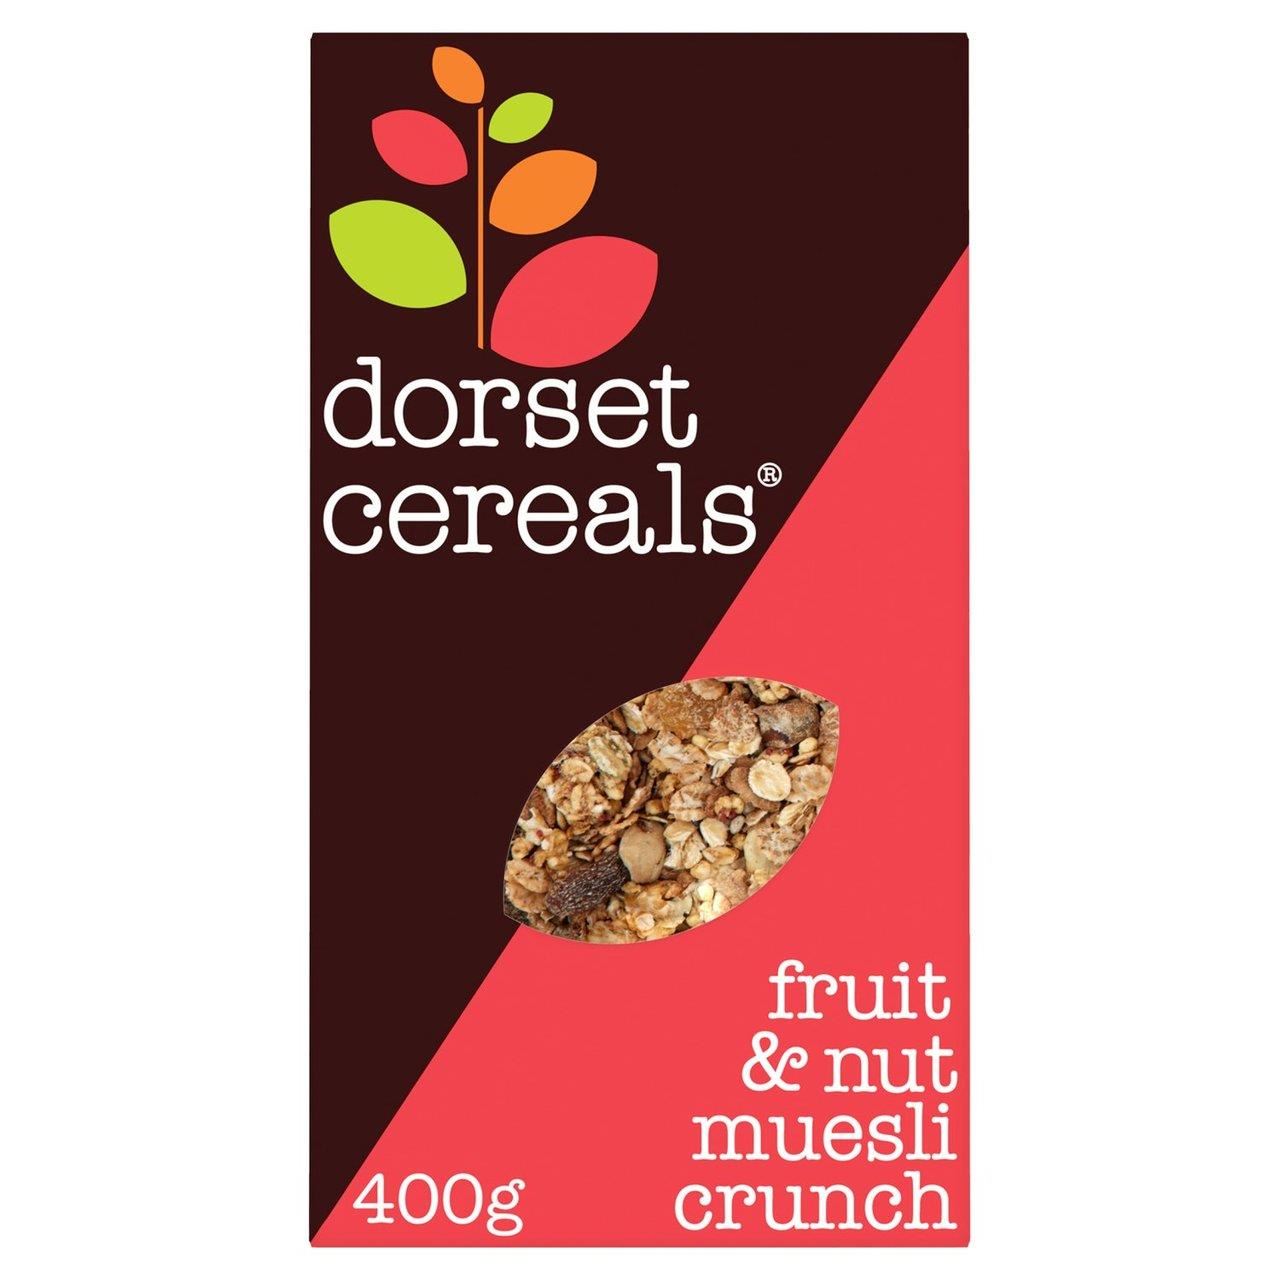 Dorset Cereals Ultimate F&N Muesli Crunch Box 400g